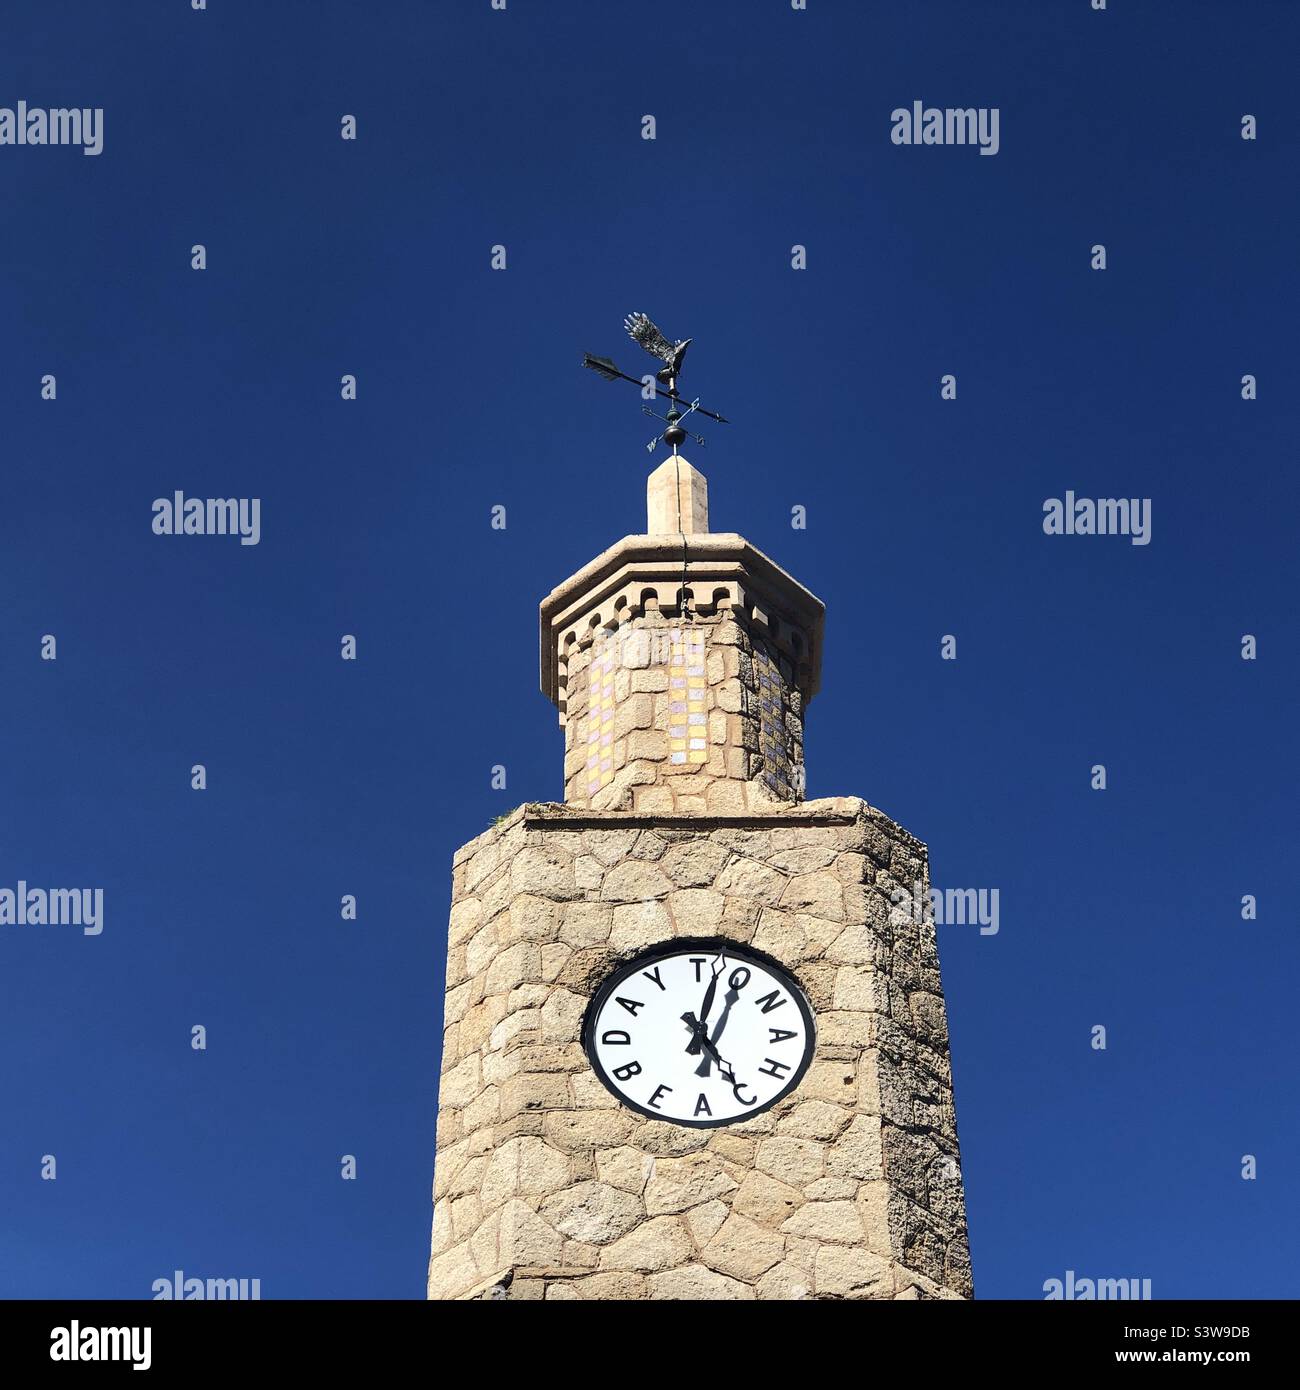 A clock tower at Daytona Beach, Florida Stock Photo